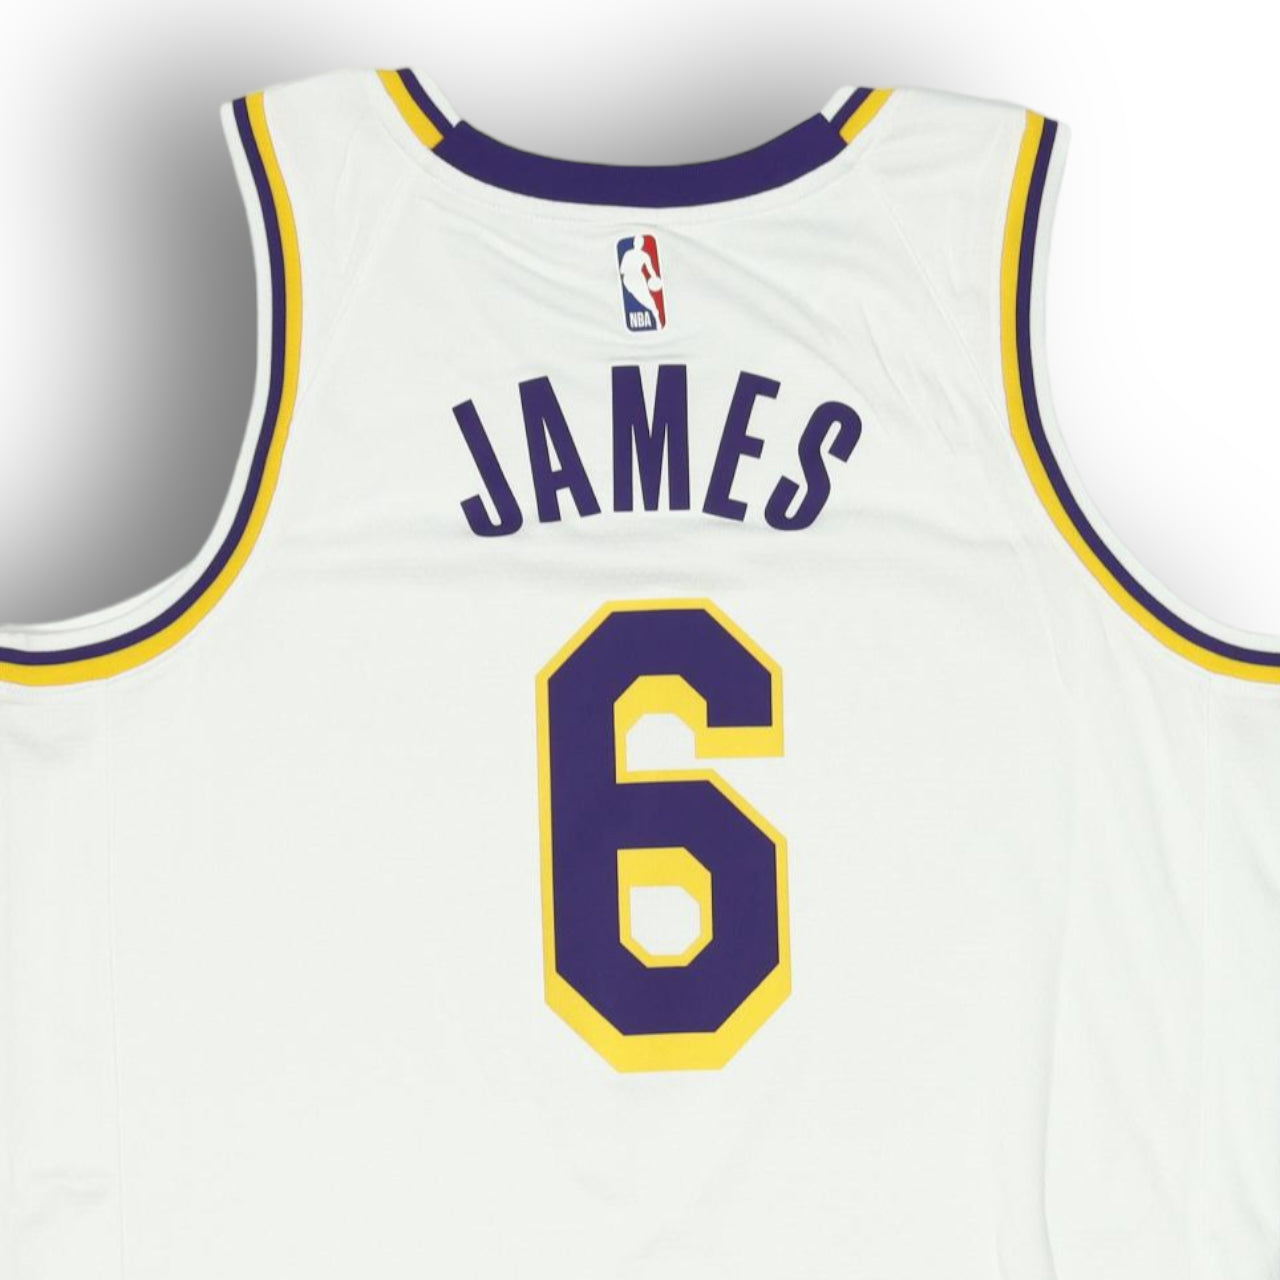 LeBron James Los Angeles Lakers Association Edition Nike Swingman Jersey - White #6 - Hoop Jersey Store